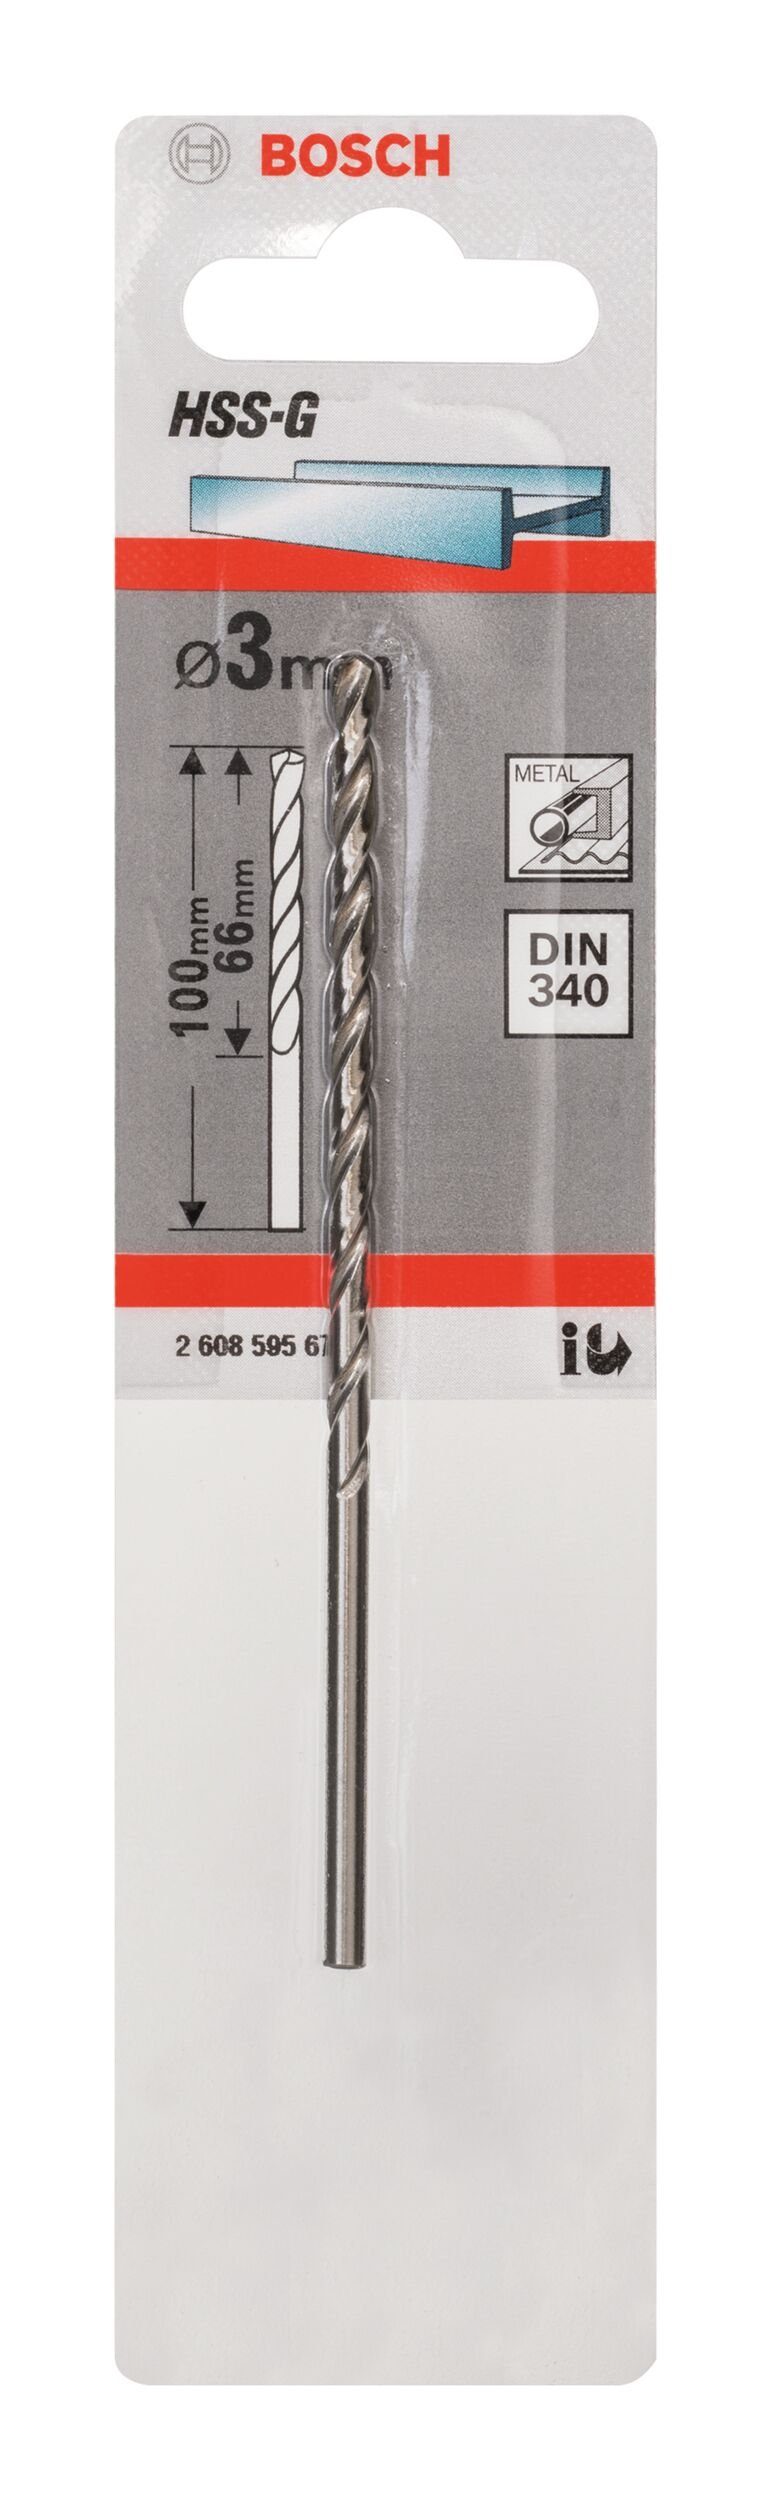 x x 340) Metallbohrer, mm 3 100 (DIN HSS-G 1er-Pack - 66 BOSCH -